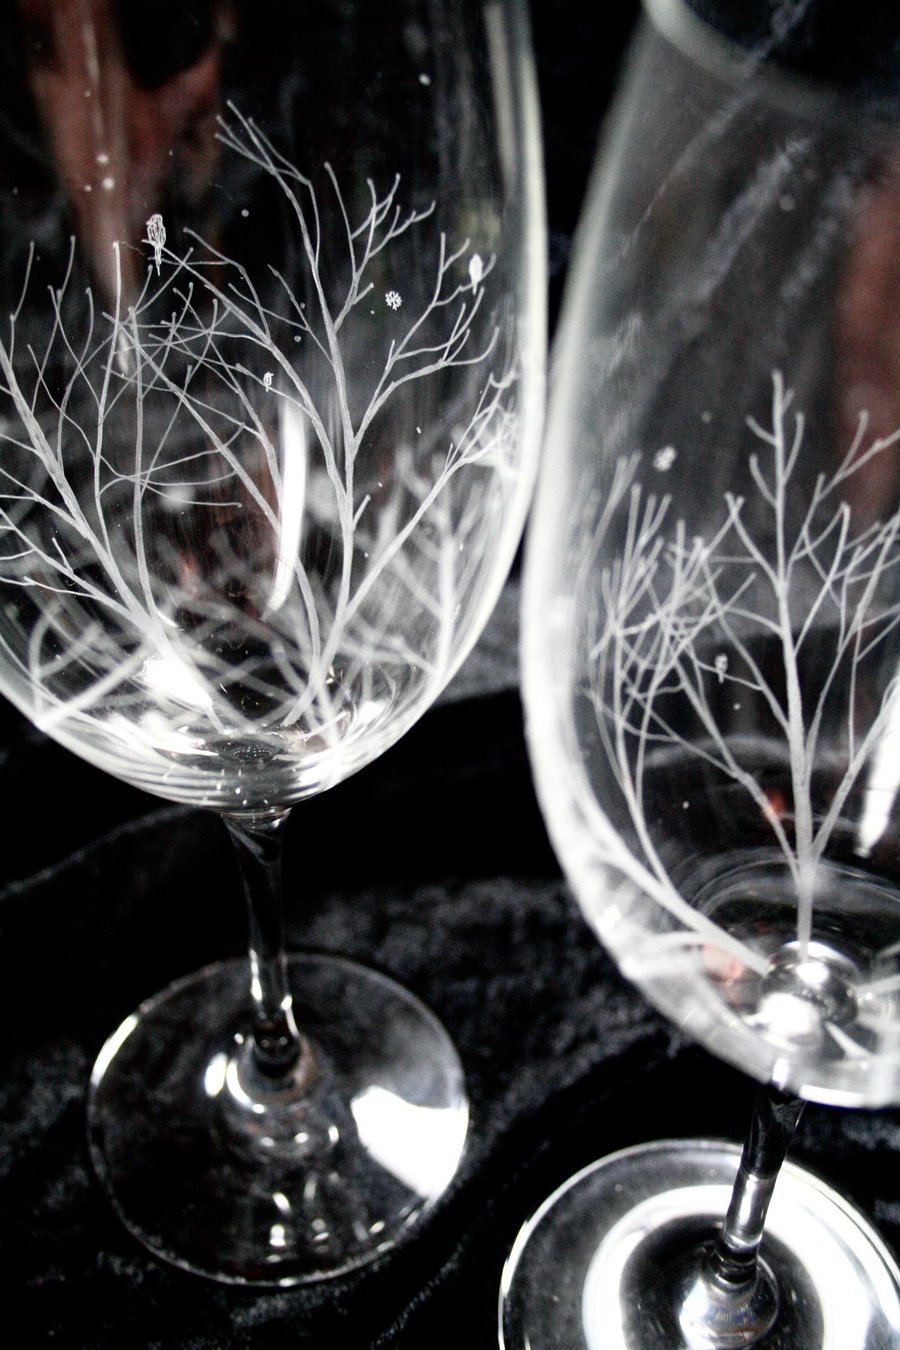 Pair of Winter Woodland Wine Glasses